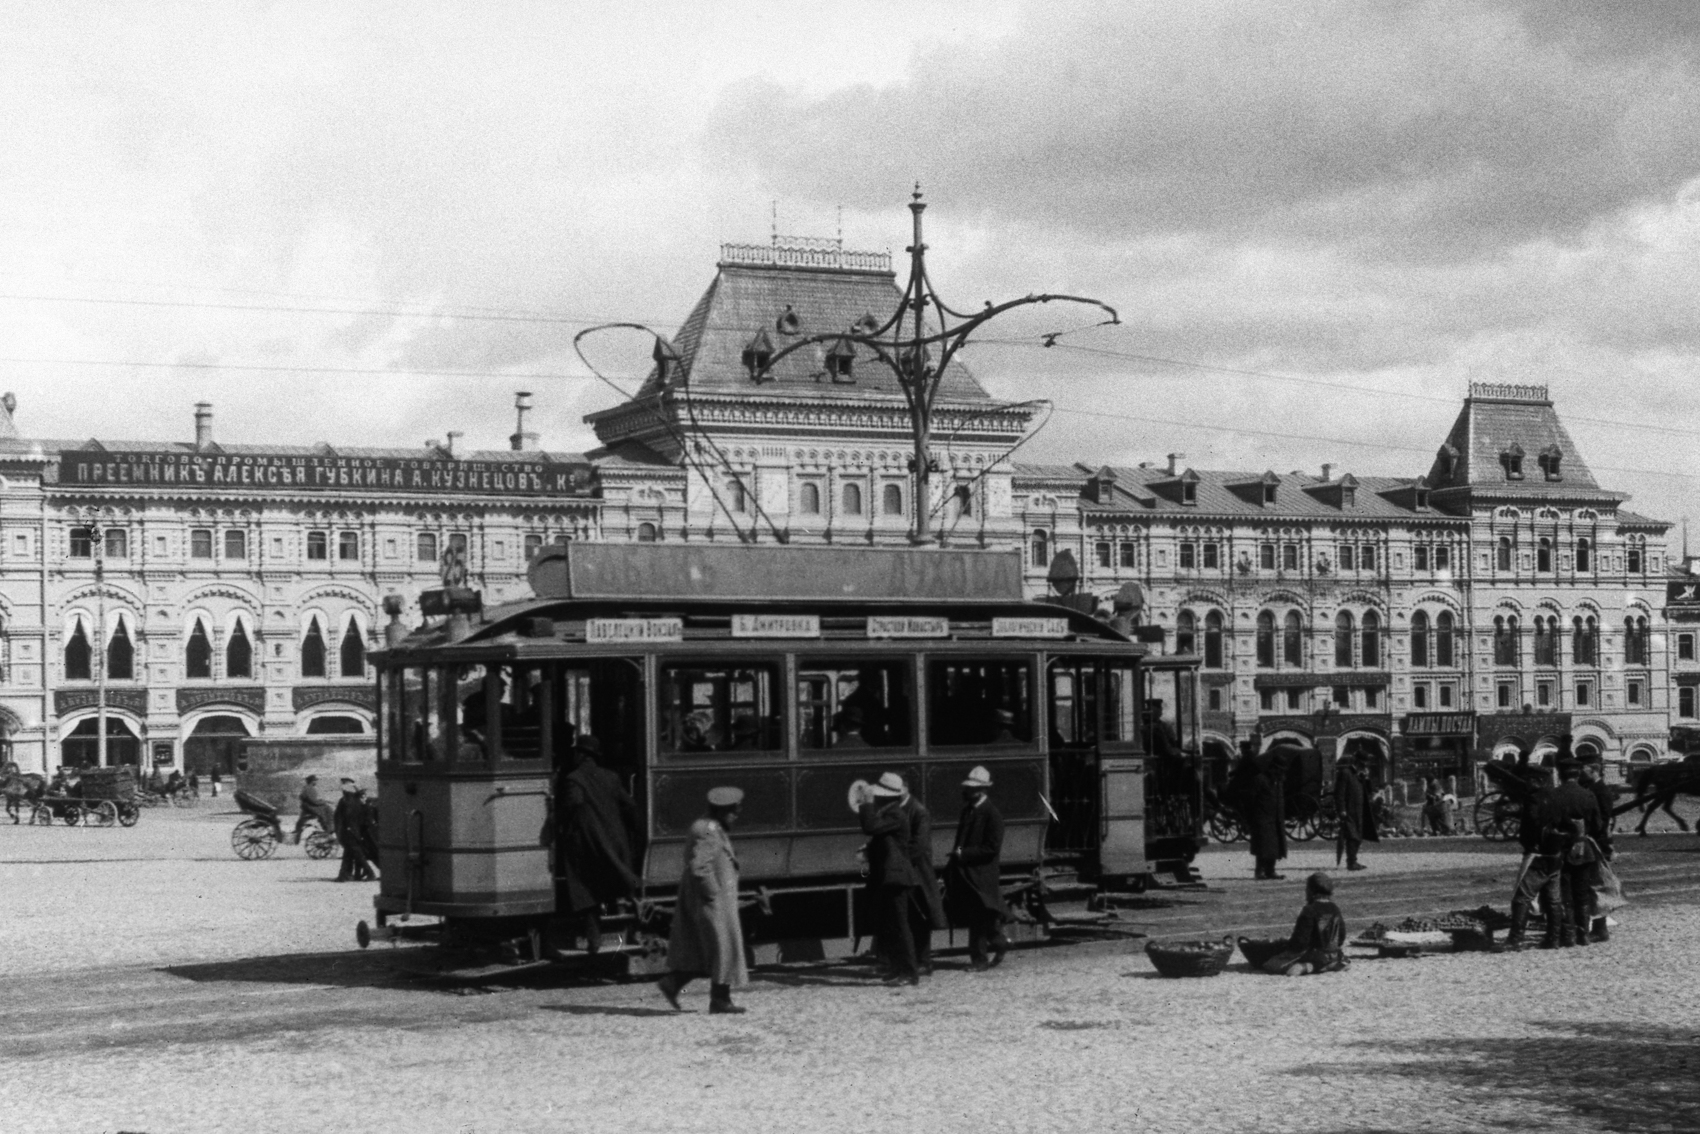 Moszkva, Ganz 2-axle motor car — 68; Moszkva — Historical photos — Electric tramway (1898-1920)